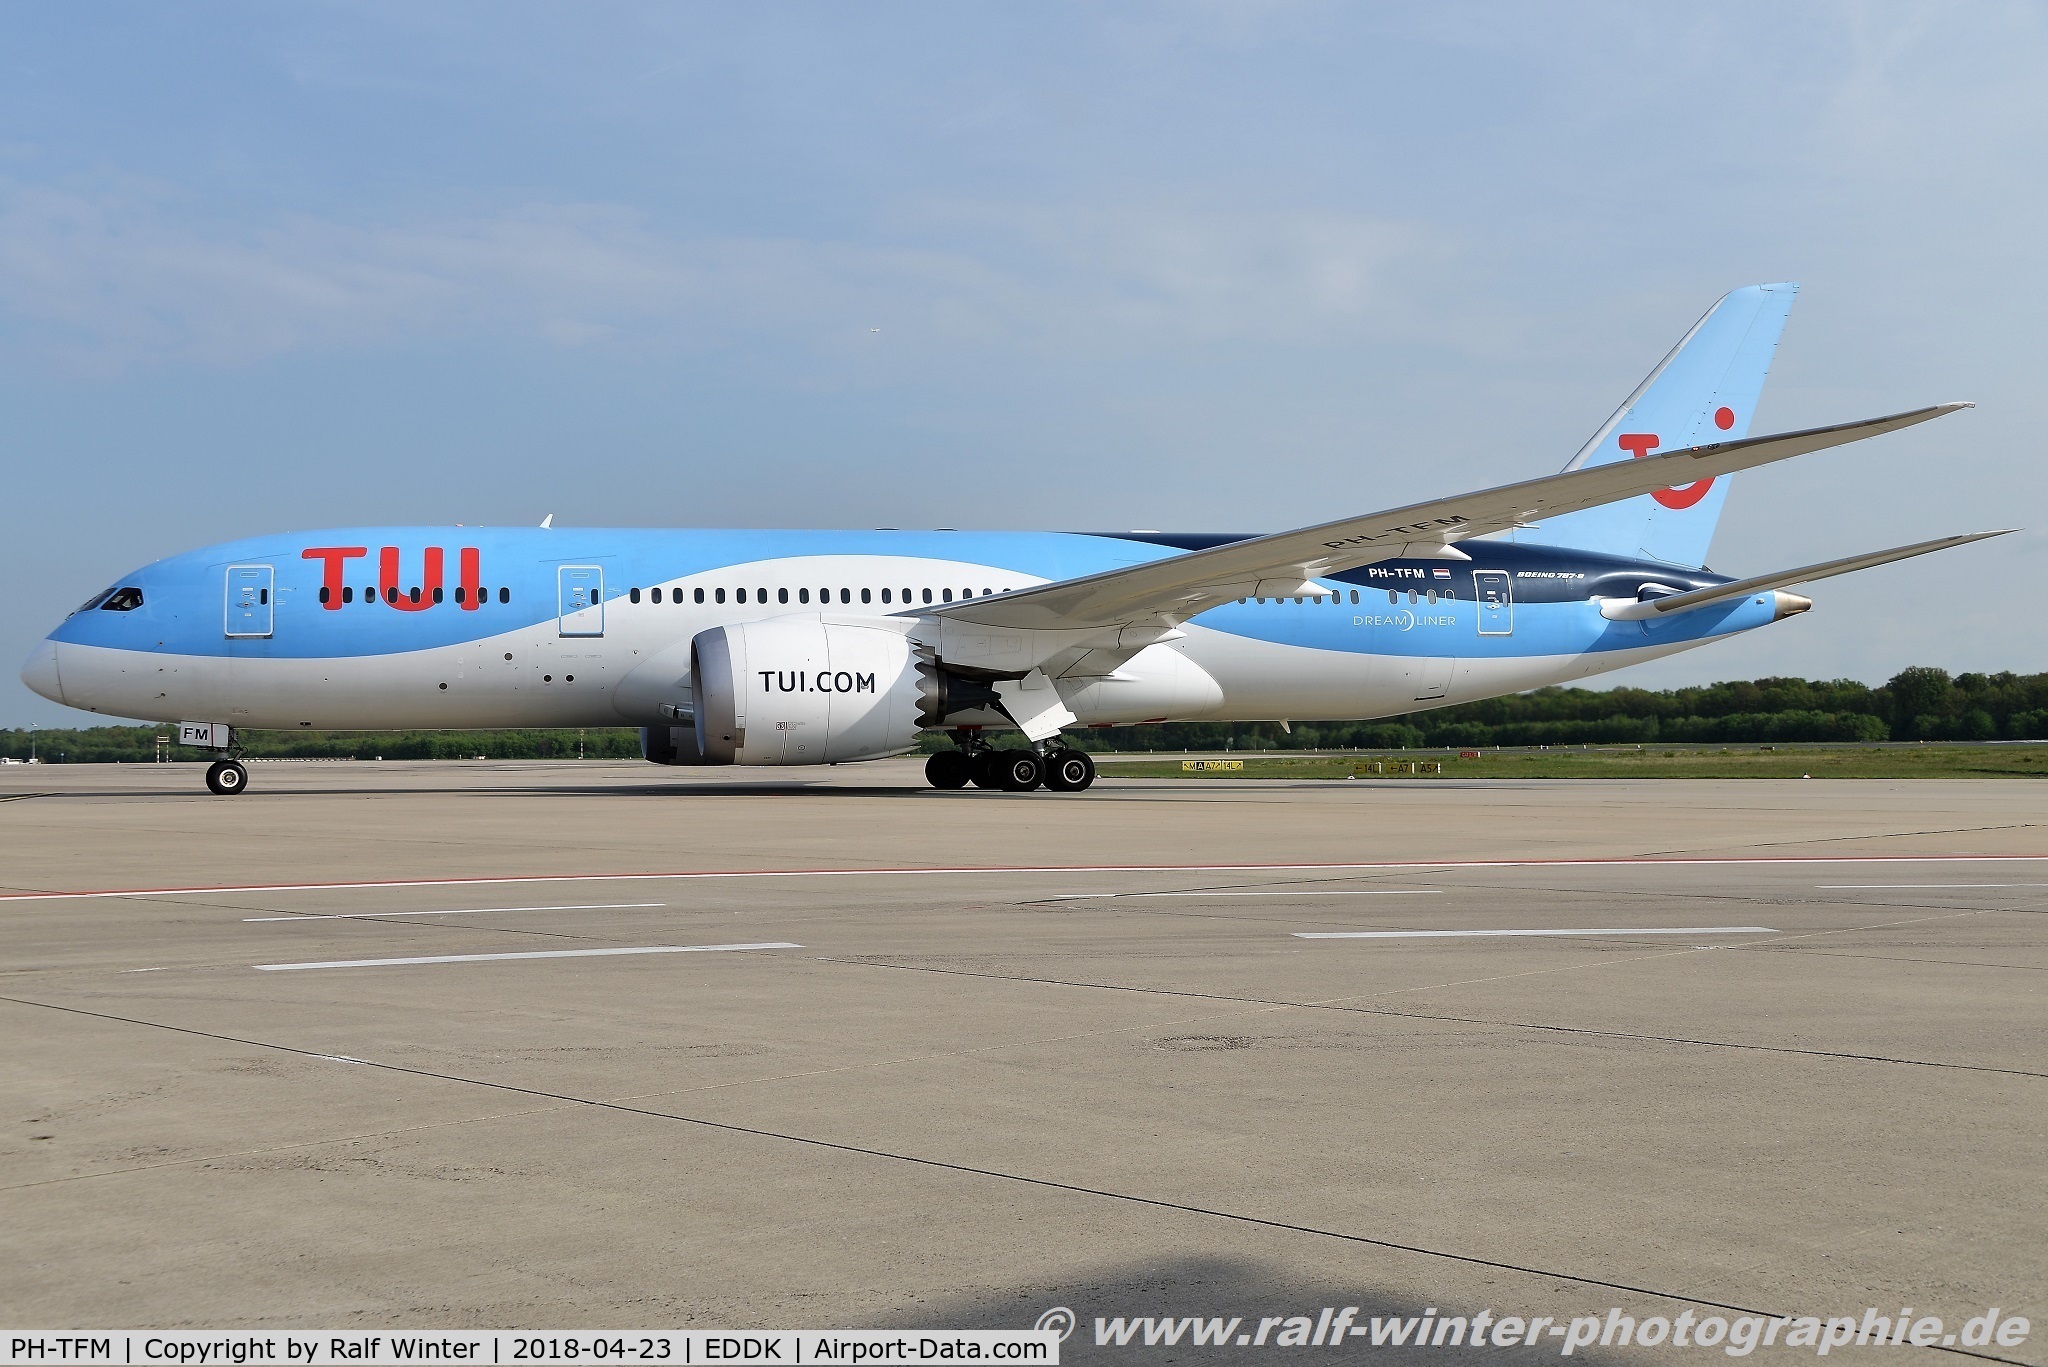 PH-TFM, 2015 Boeing 787-8 Dreamliner Dreamliner C/N 36429, Boeing 787-8 Dreamliner - TUIfly Netherlands - 36429 - PH-TFM - 23.04.2018 - CGN